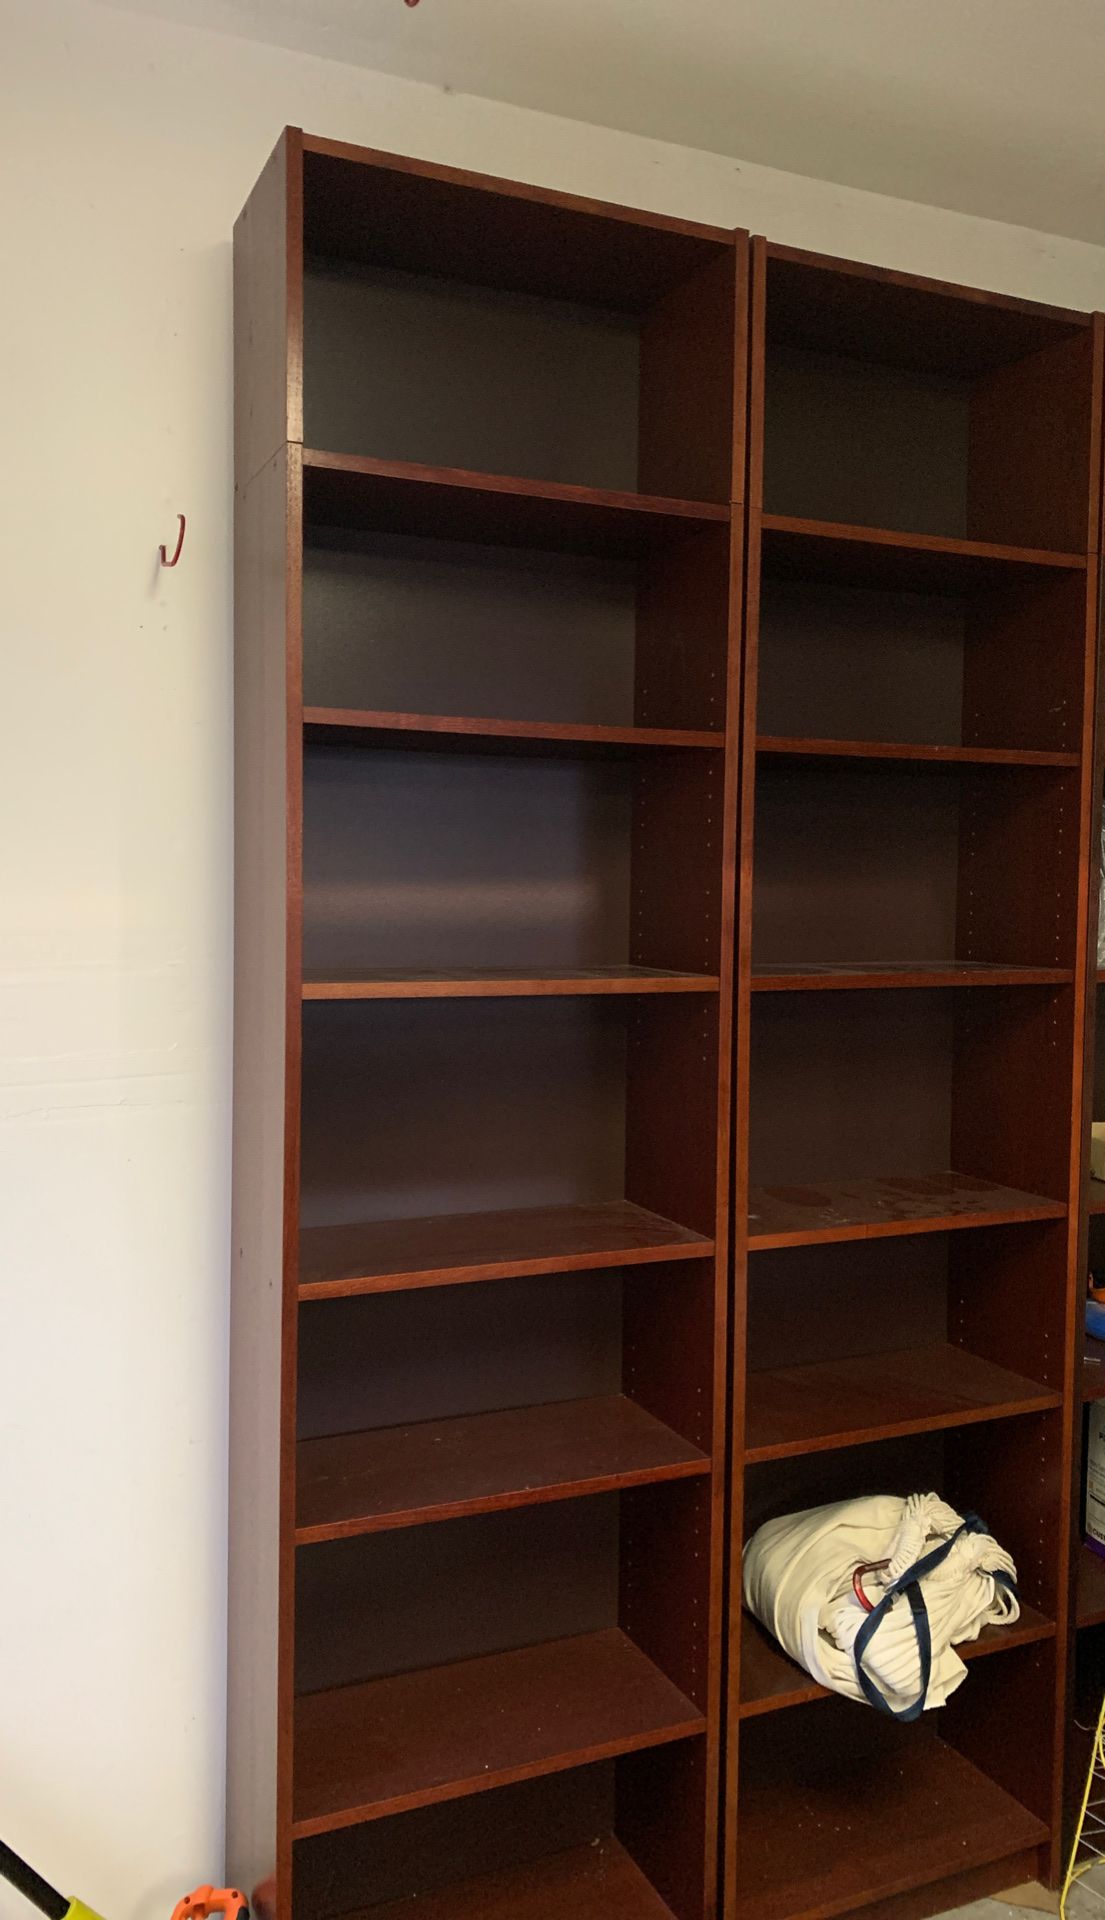 Tall book/decorative shelves, bookshelf